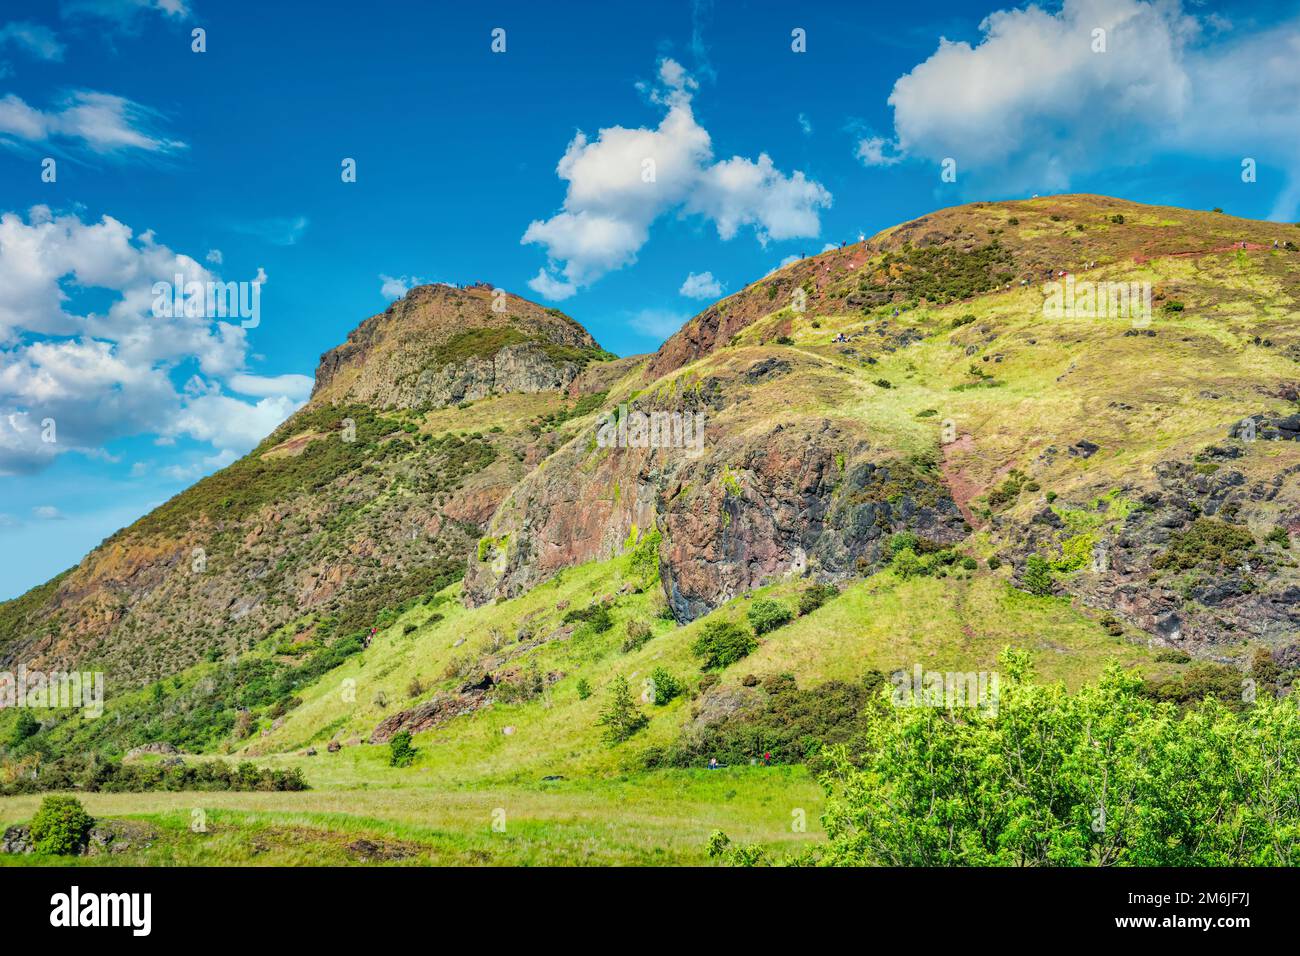 Arthur's Seat mountain in Holyrood Park, Edinburgh, Scotland UK. Stock Photo